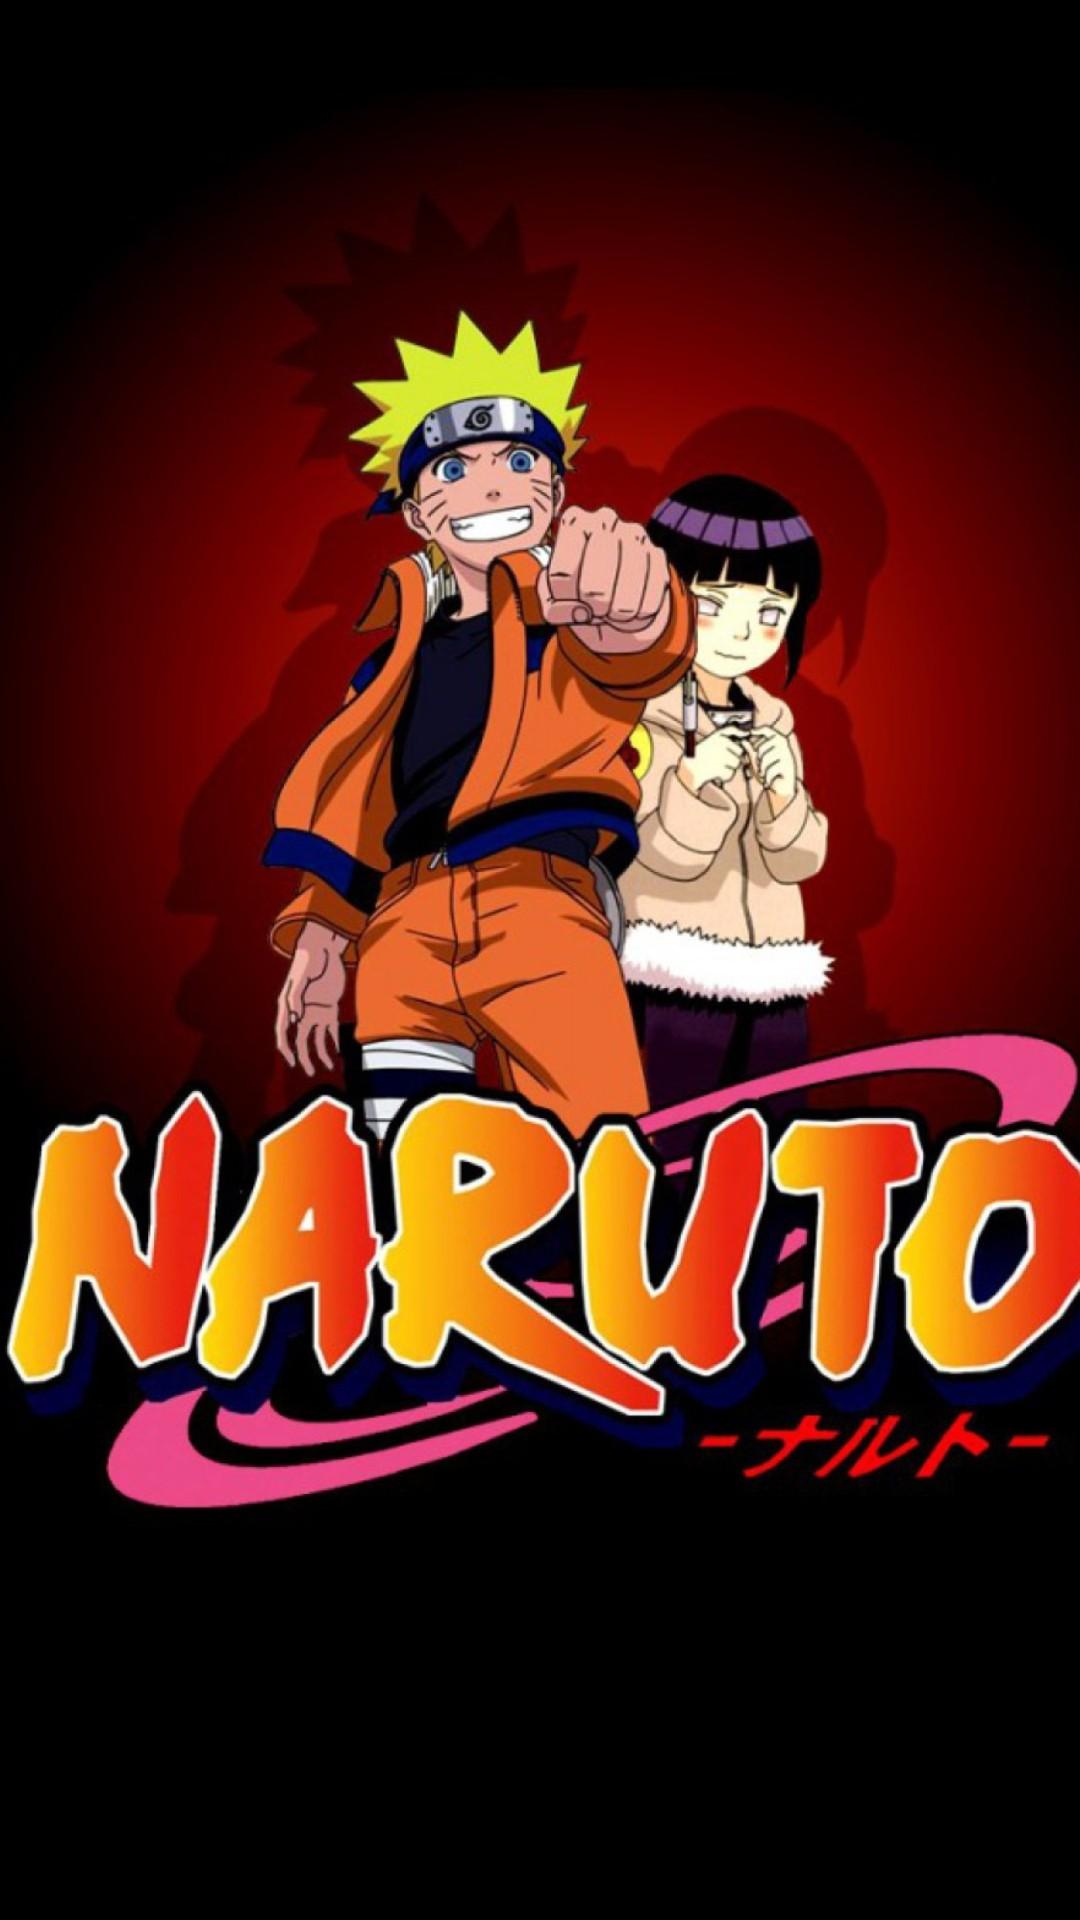 Naruto iPhone Background HD Desktop Wallpaper Cool Image